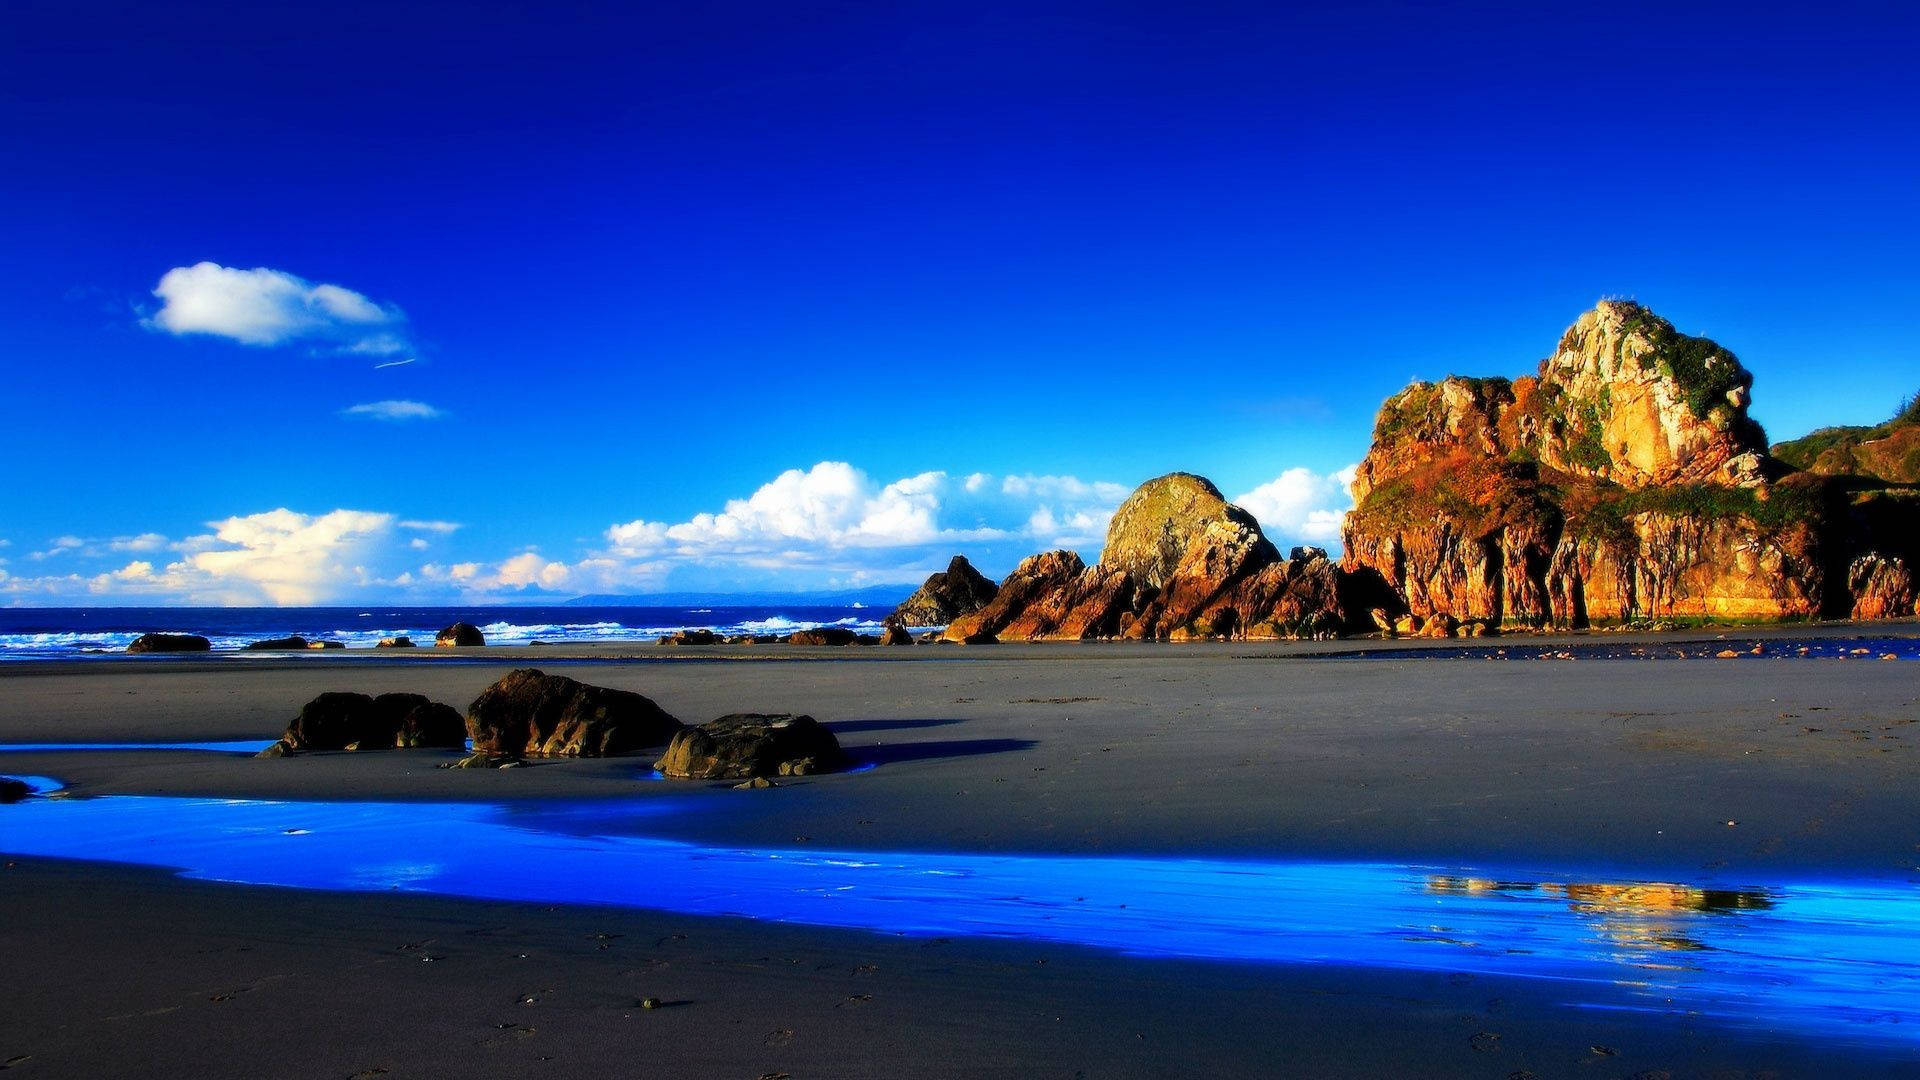 Enjoy a Stunning View of a Shallow Beach with Rocks Wallpaper